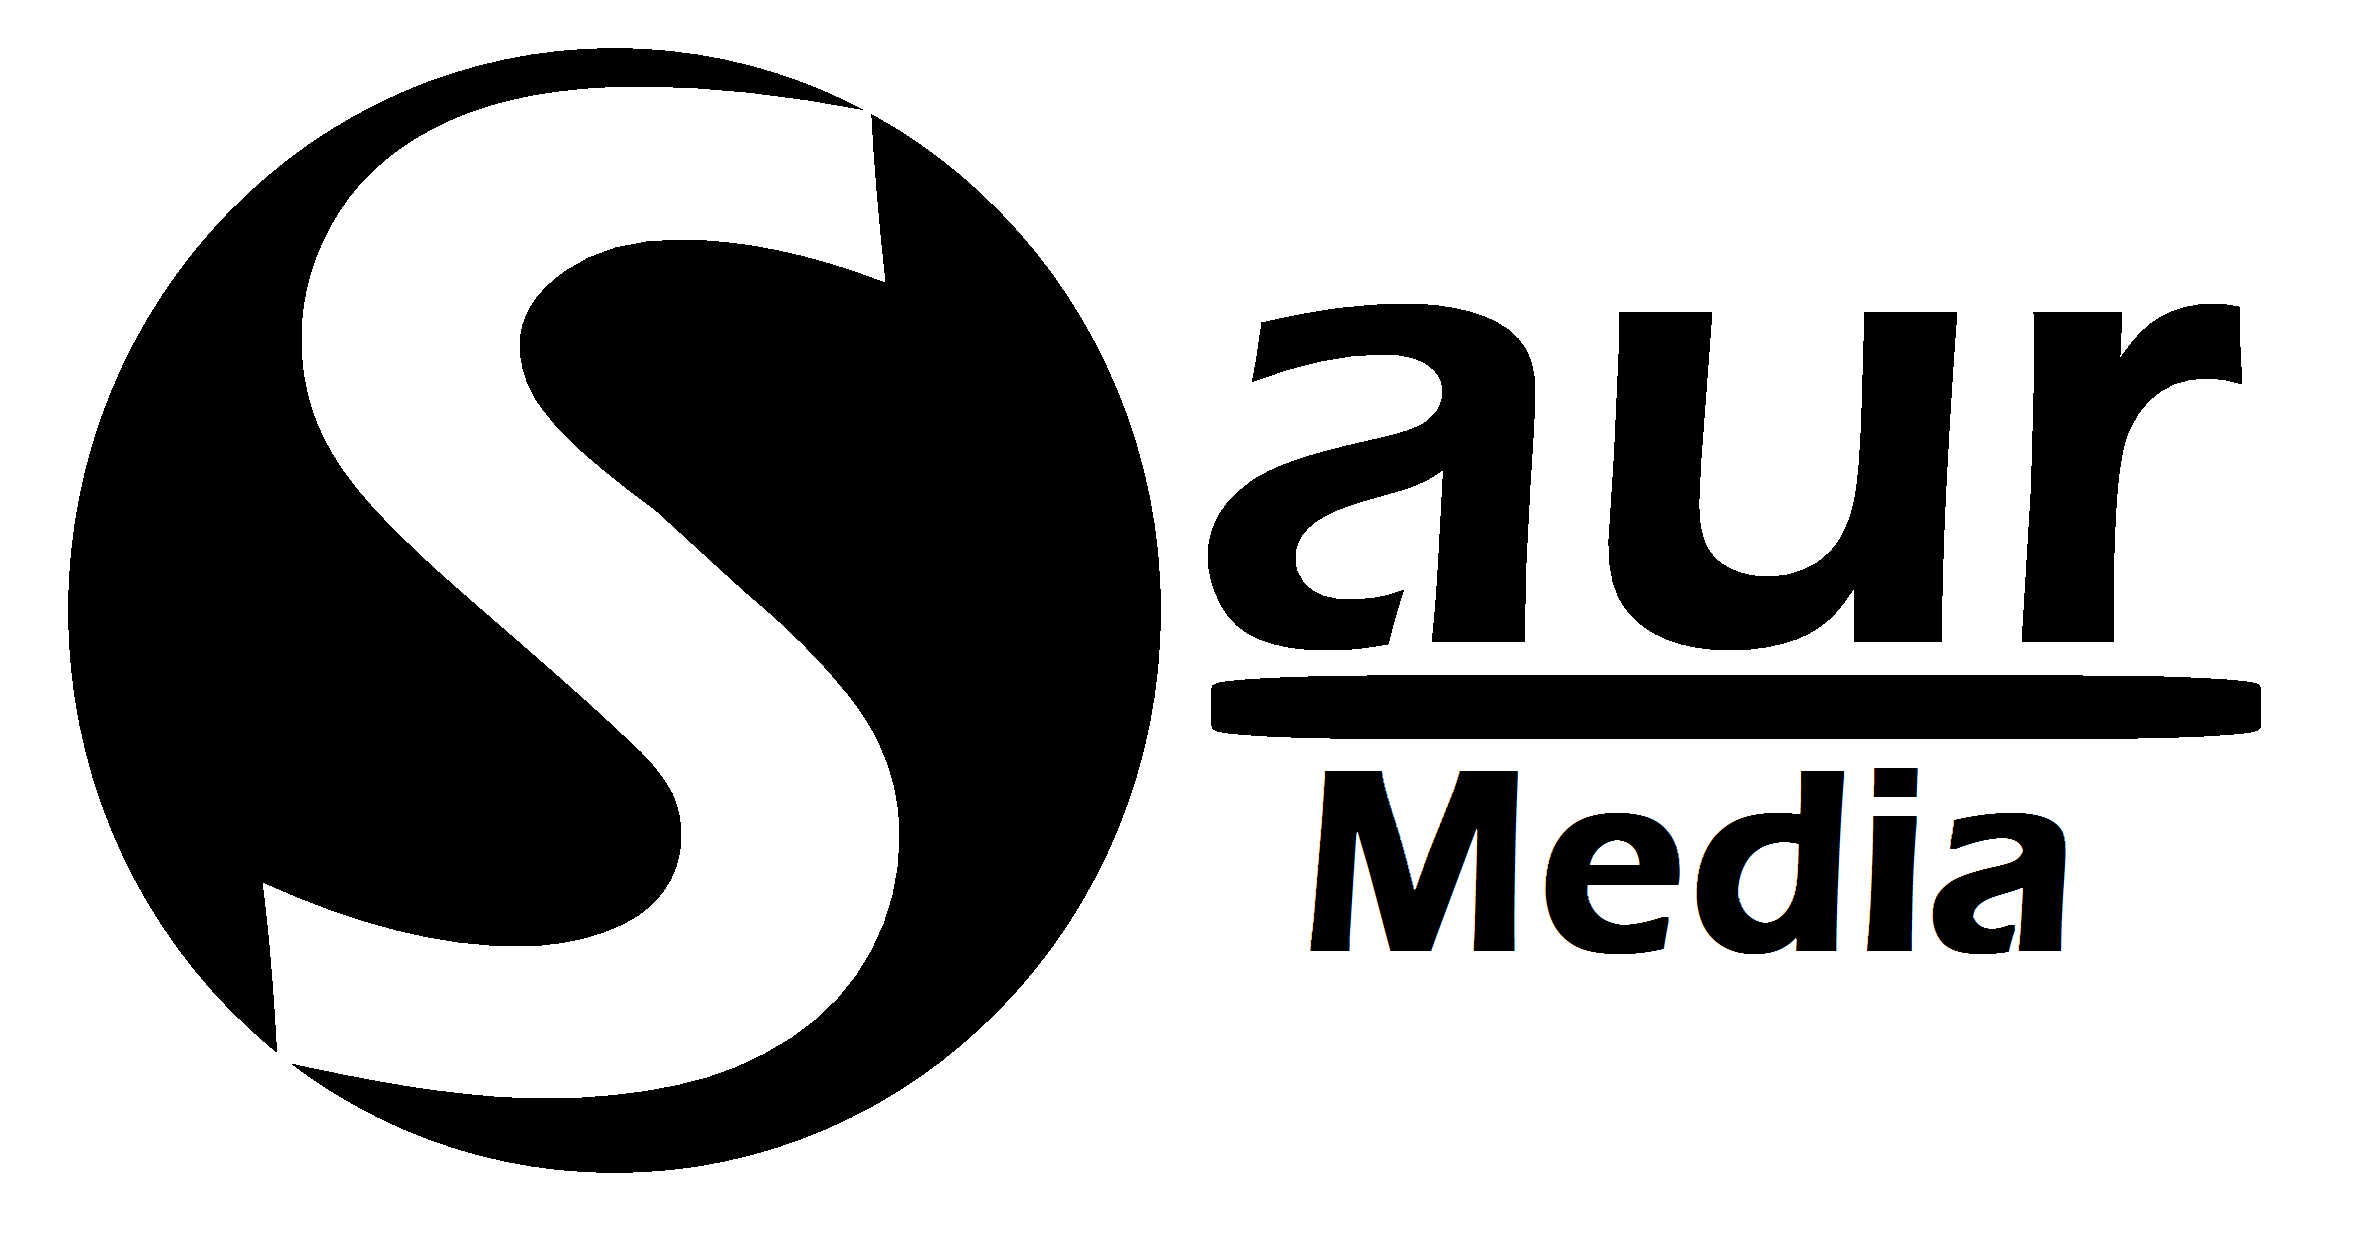 Saur Media -  
Friedrich-Mößner-Straße 28, 79312 Emmendingen
Tel.:+4915154780836
Mail: Info@saur-media.de
Web: www.saur-media.de